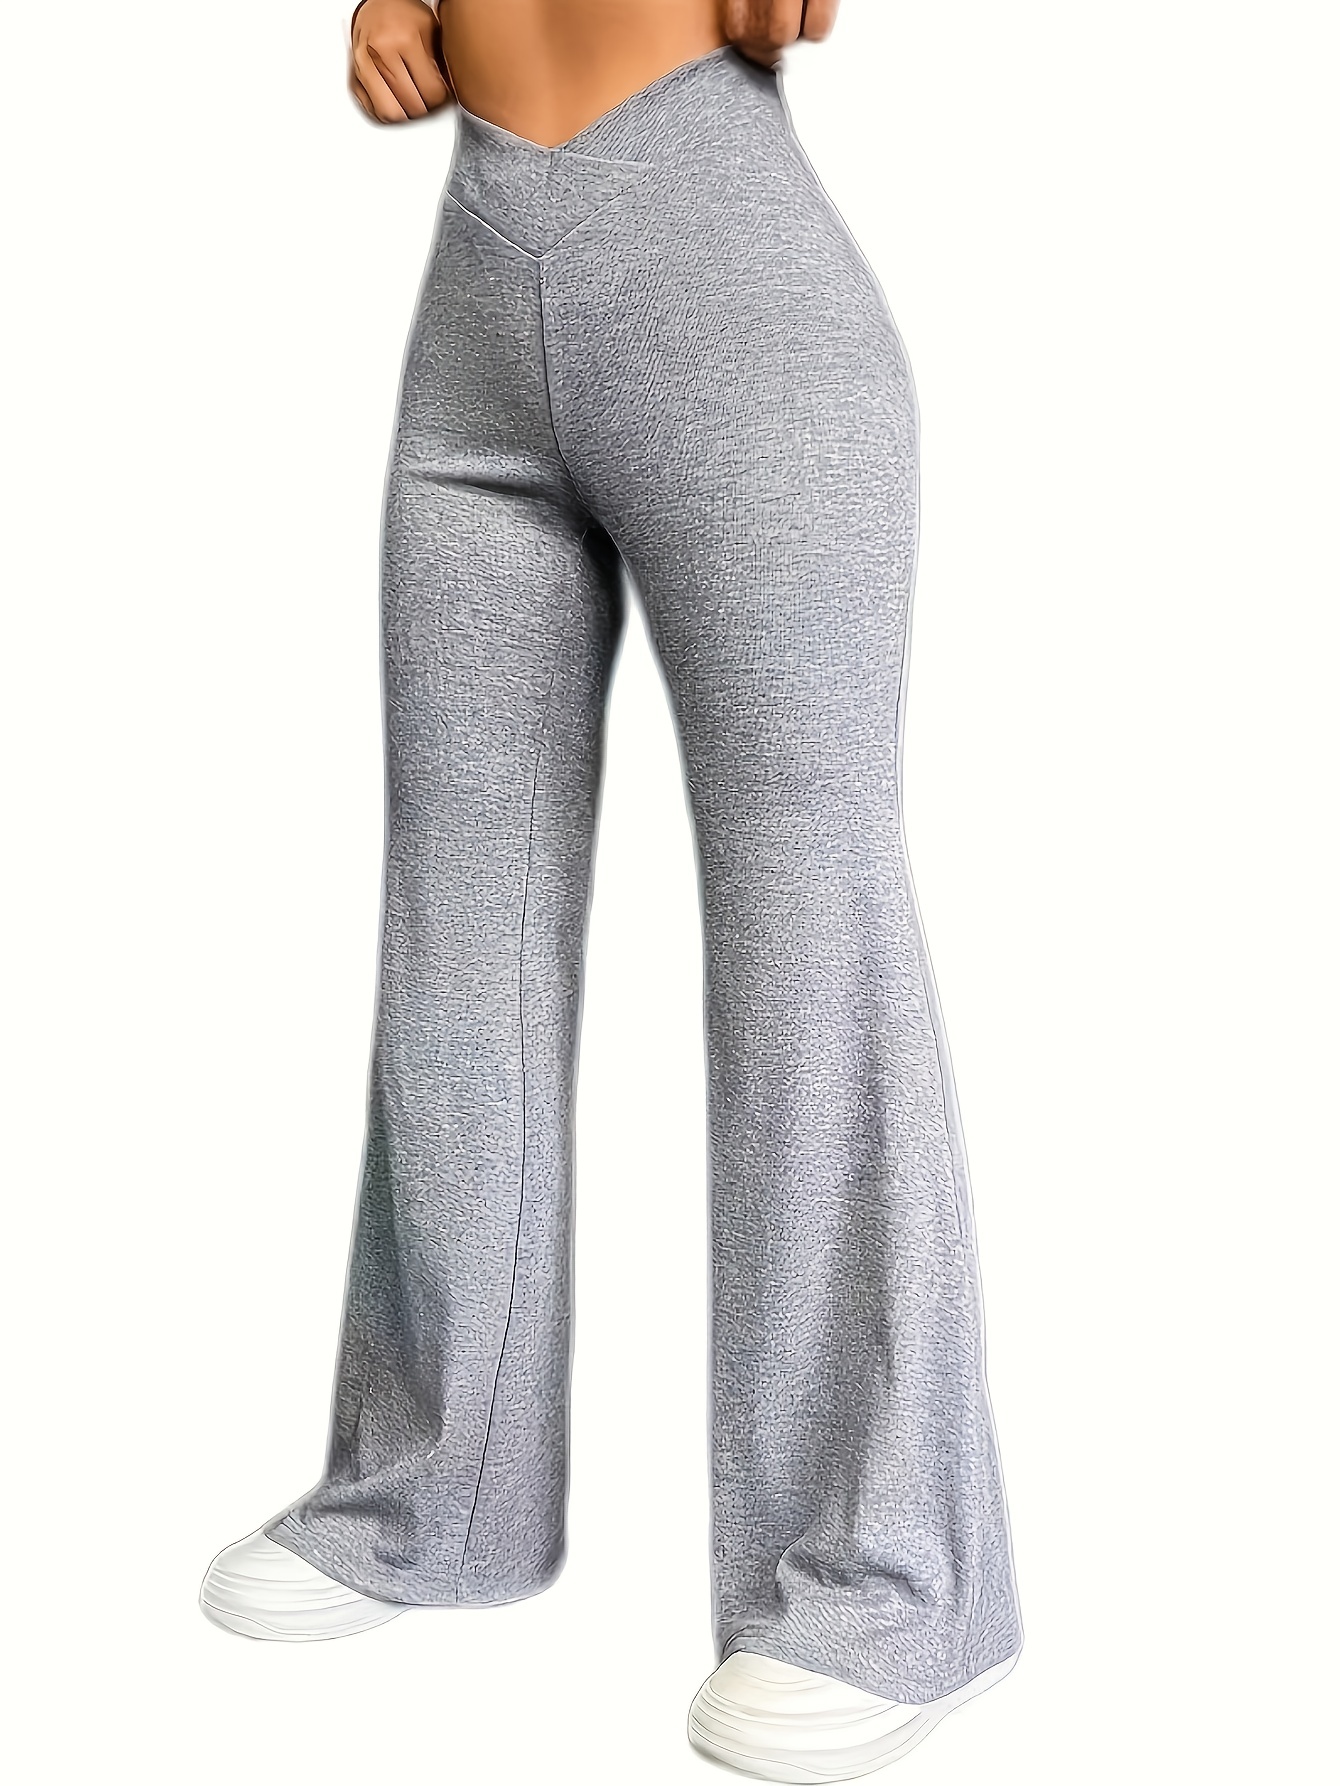 fvwitlyh Yoga Pants for Girls Size 12-14 Hollow Waist Plus Women